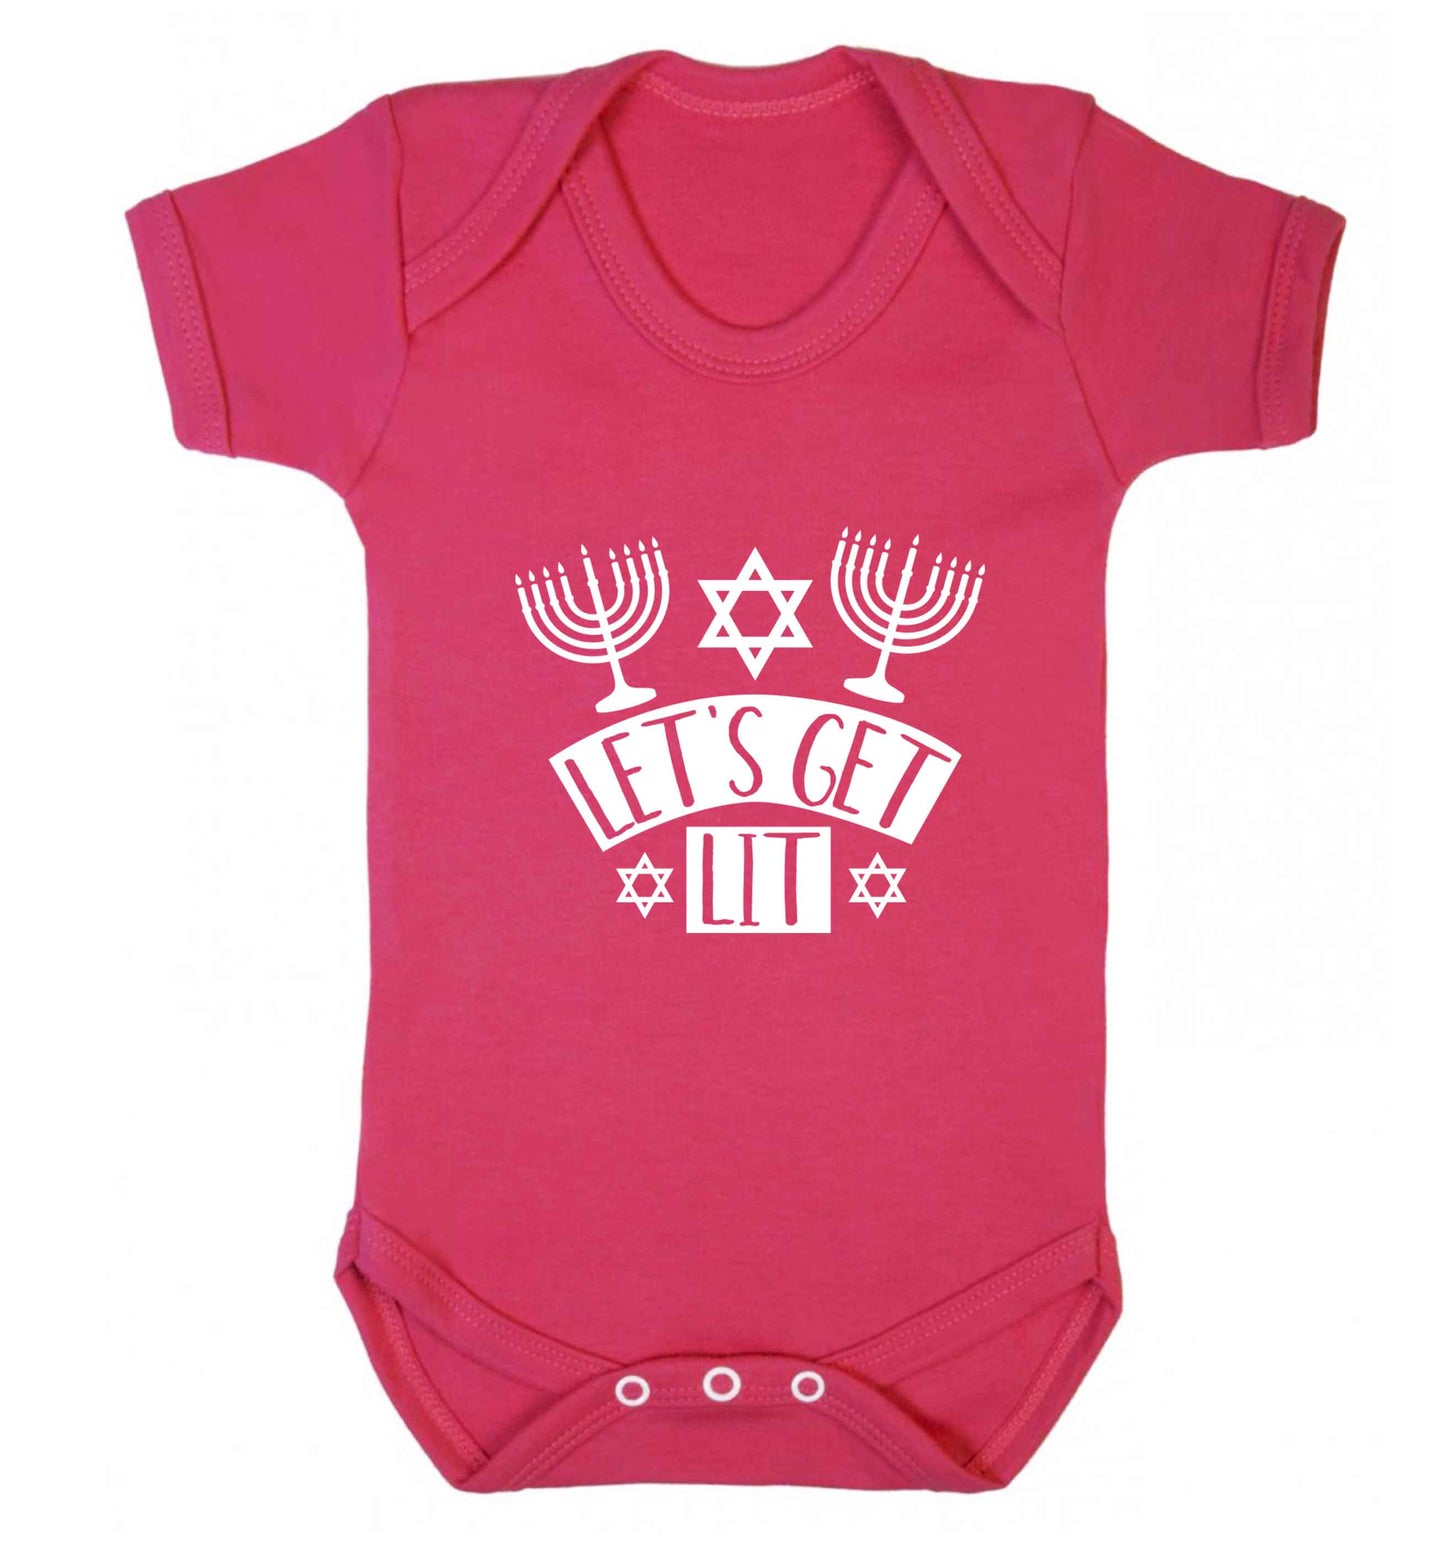 Let's get lit baby vest dark pink 18-24 months